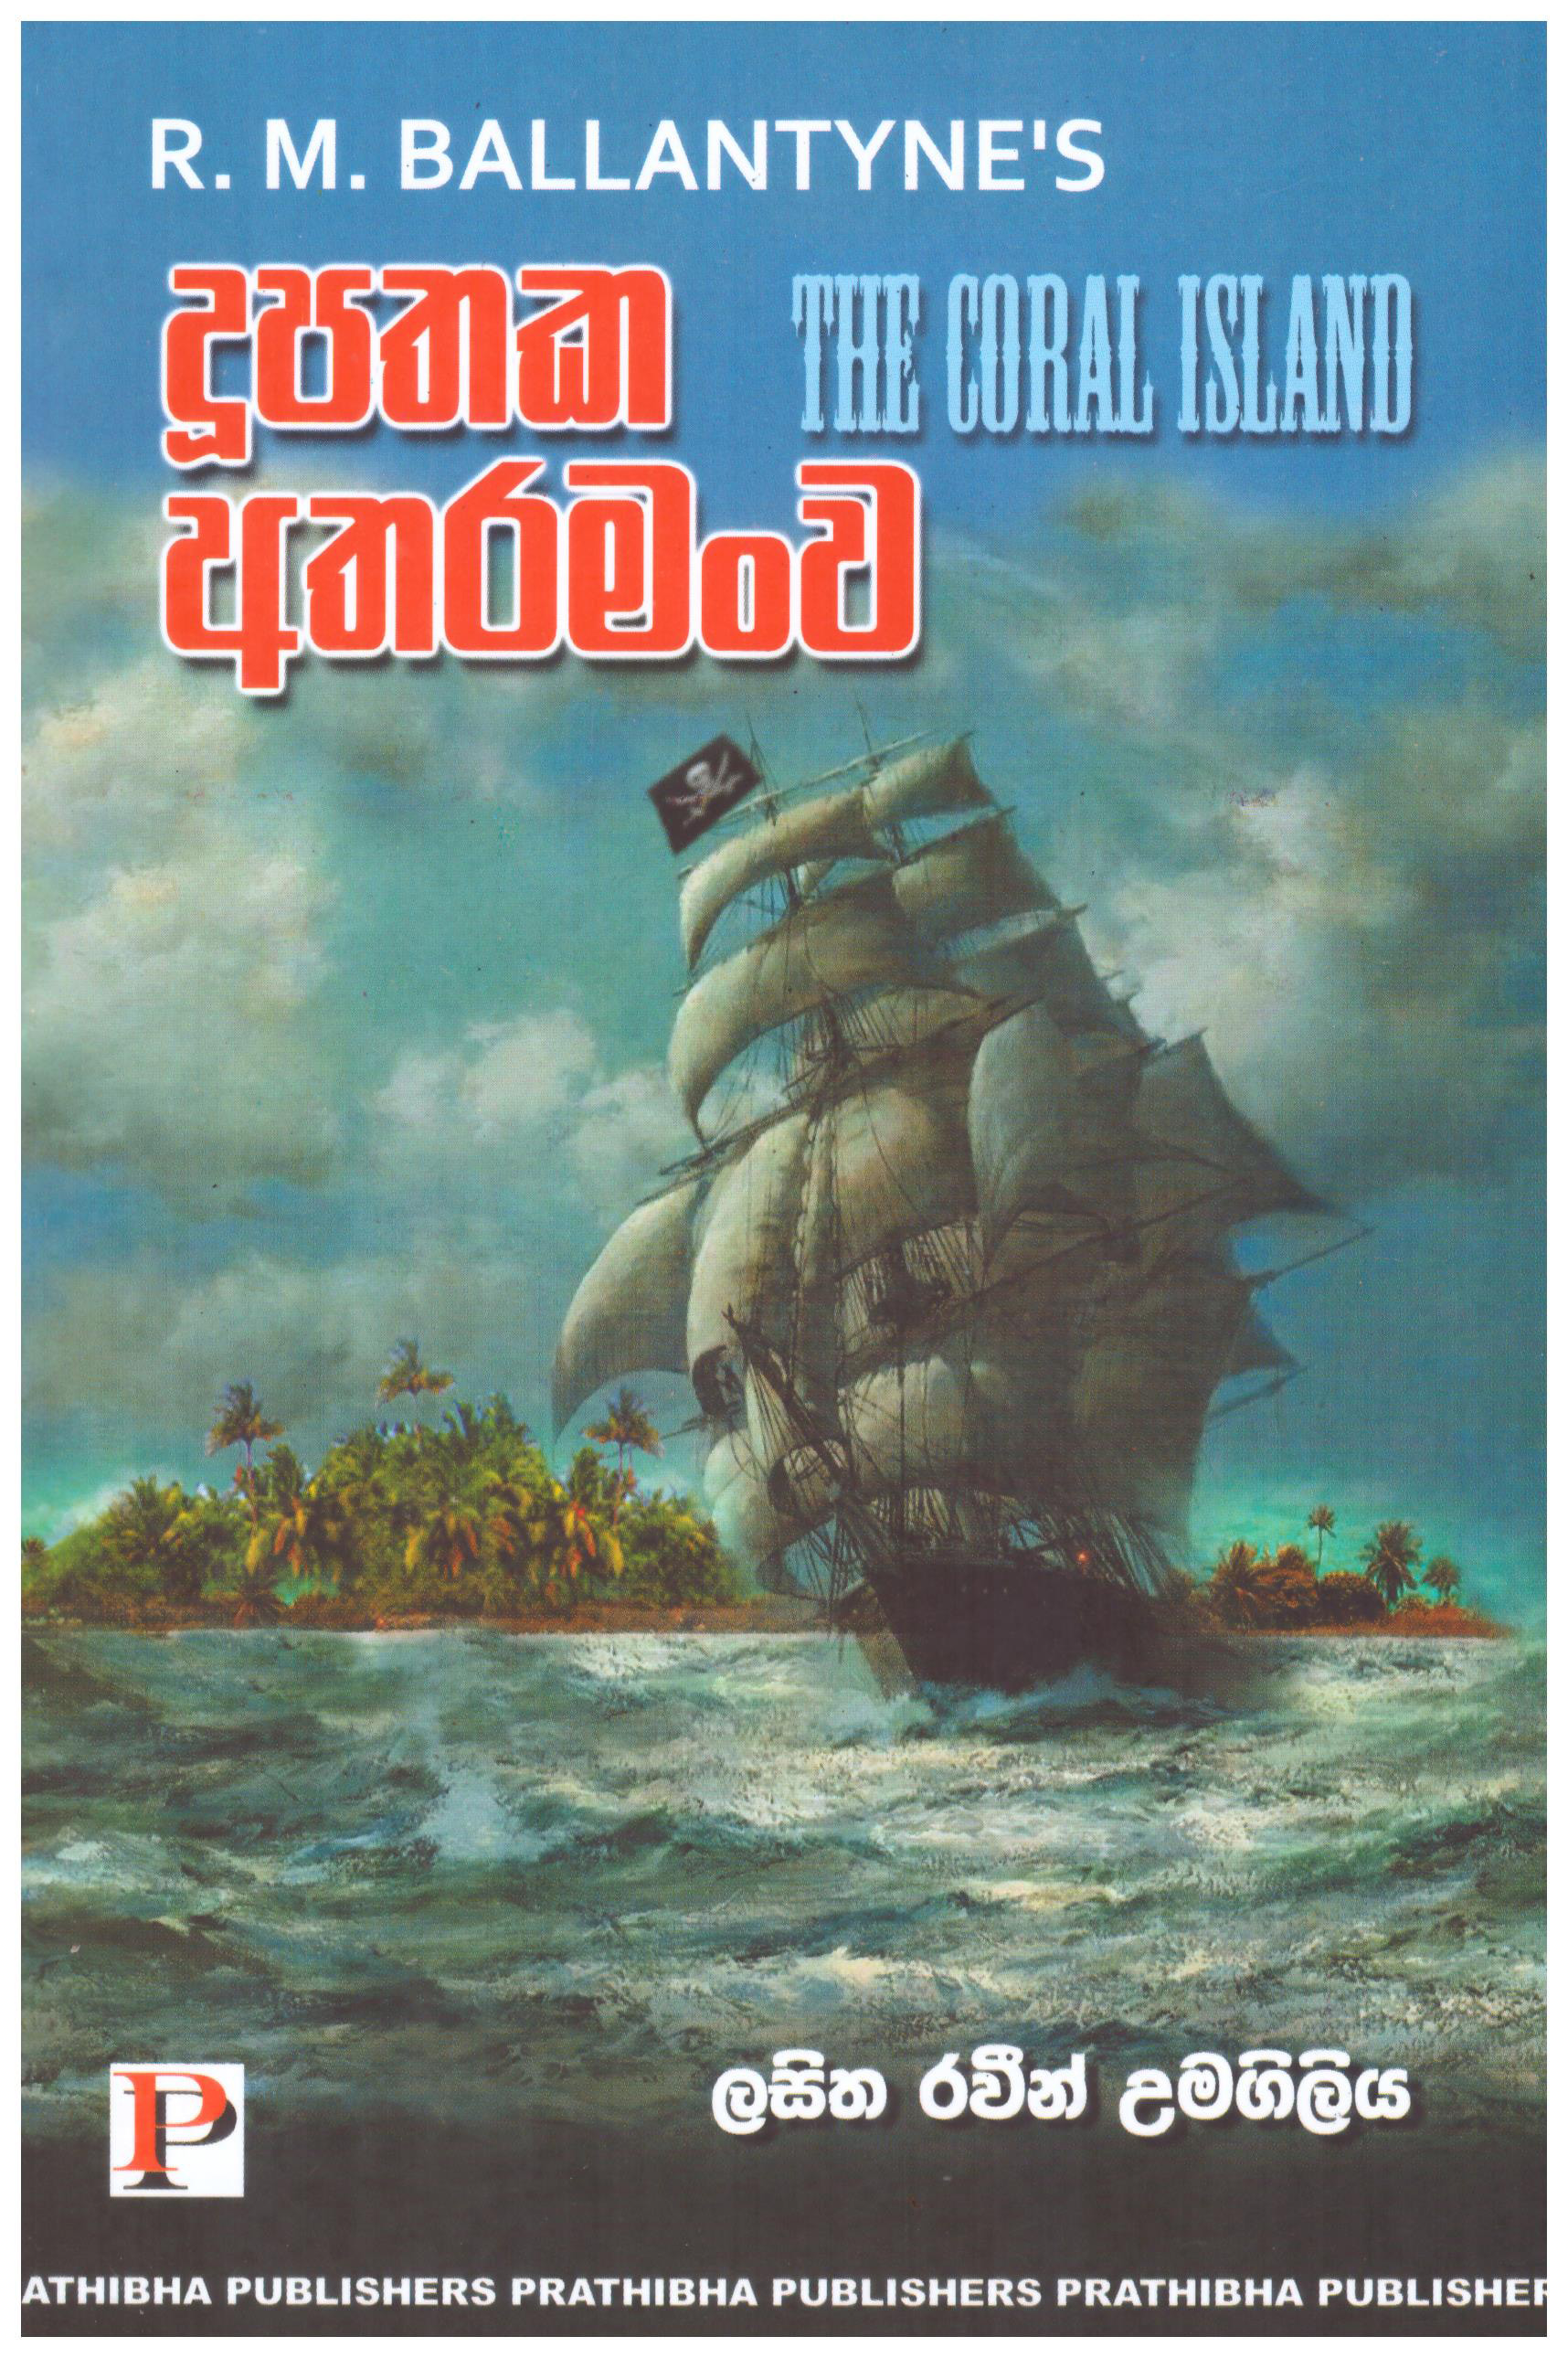 Dupathaka Atharamanwa Translation of The Coral Island By R.M. Ballantynes